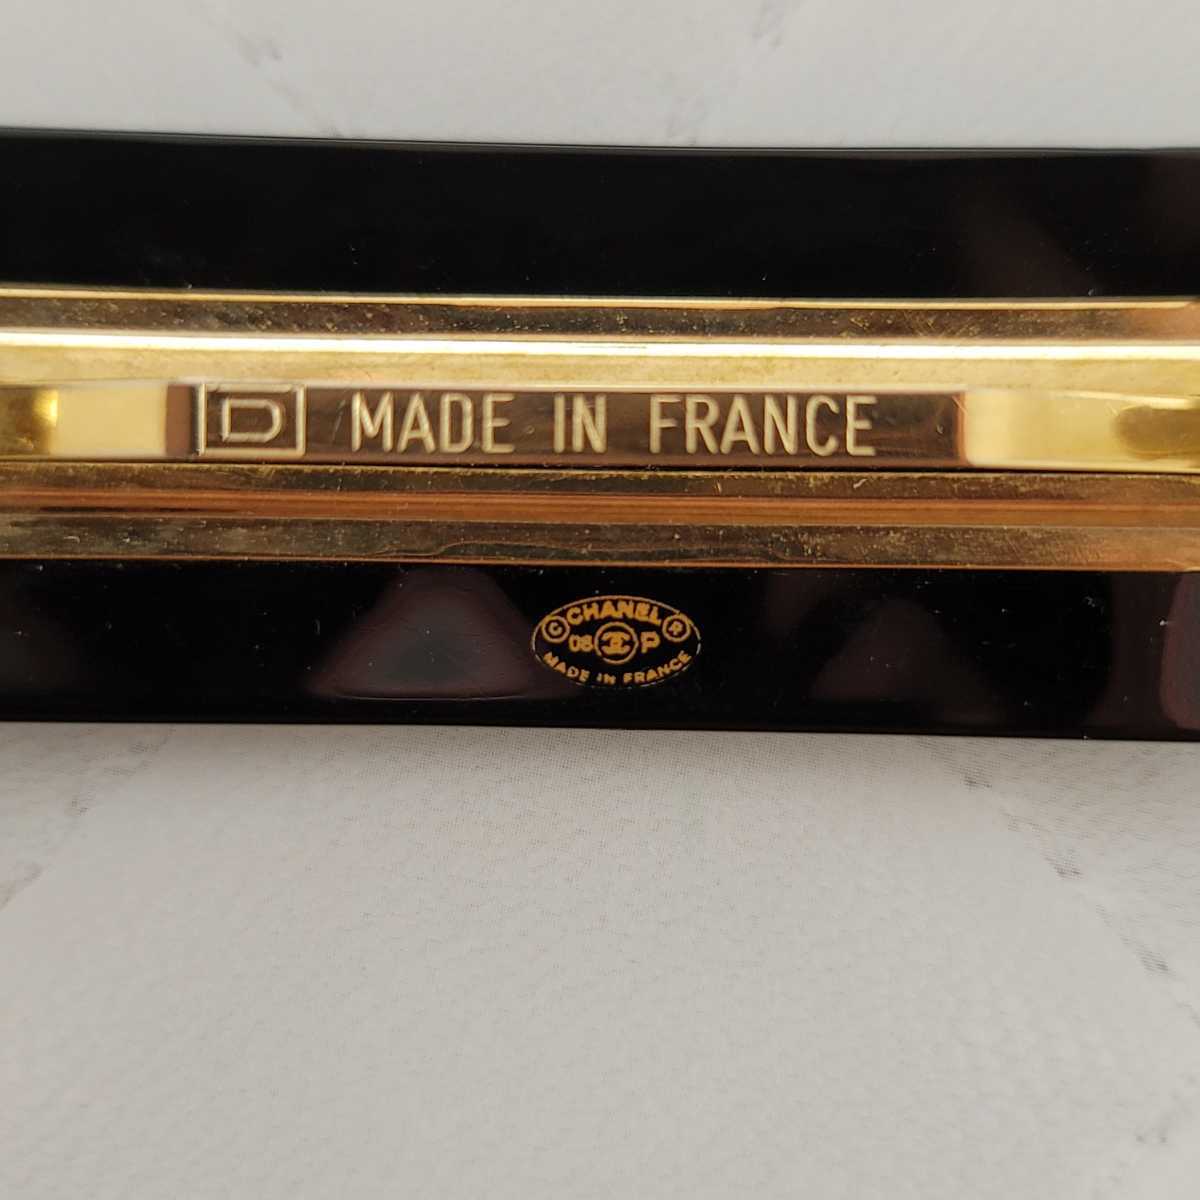  Chanel barrette beautiful goods 